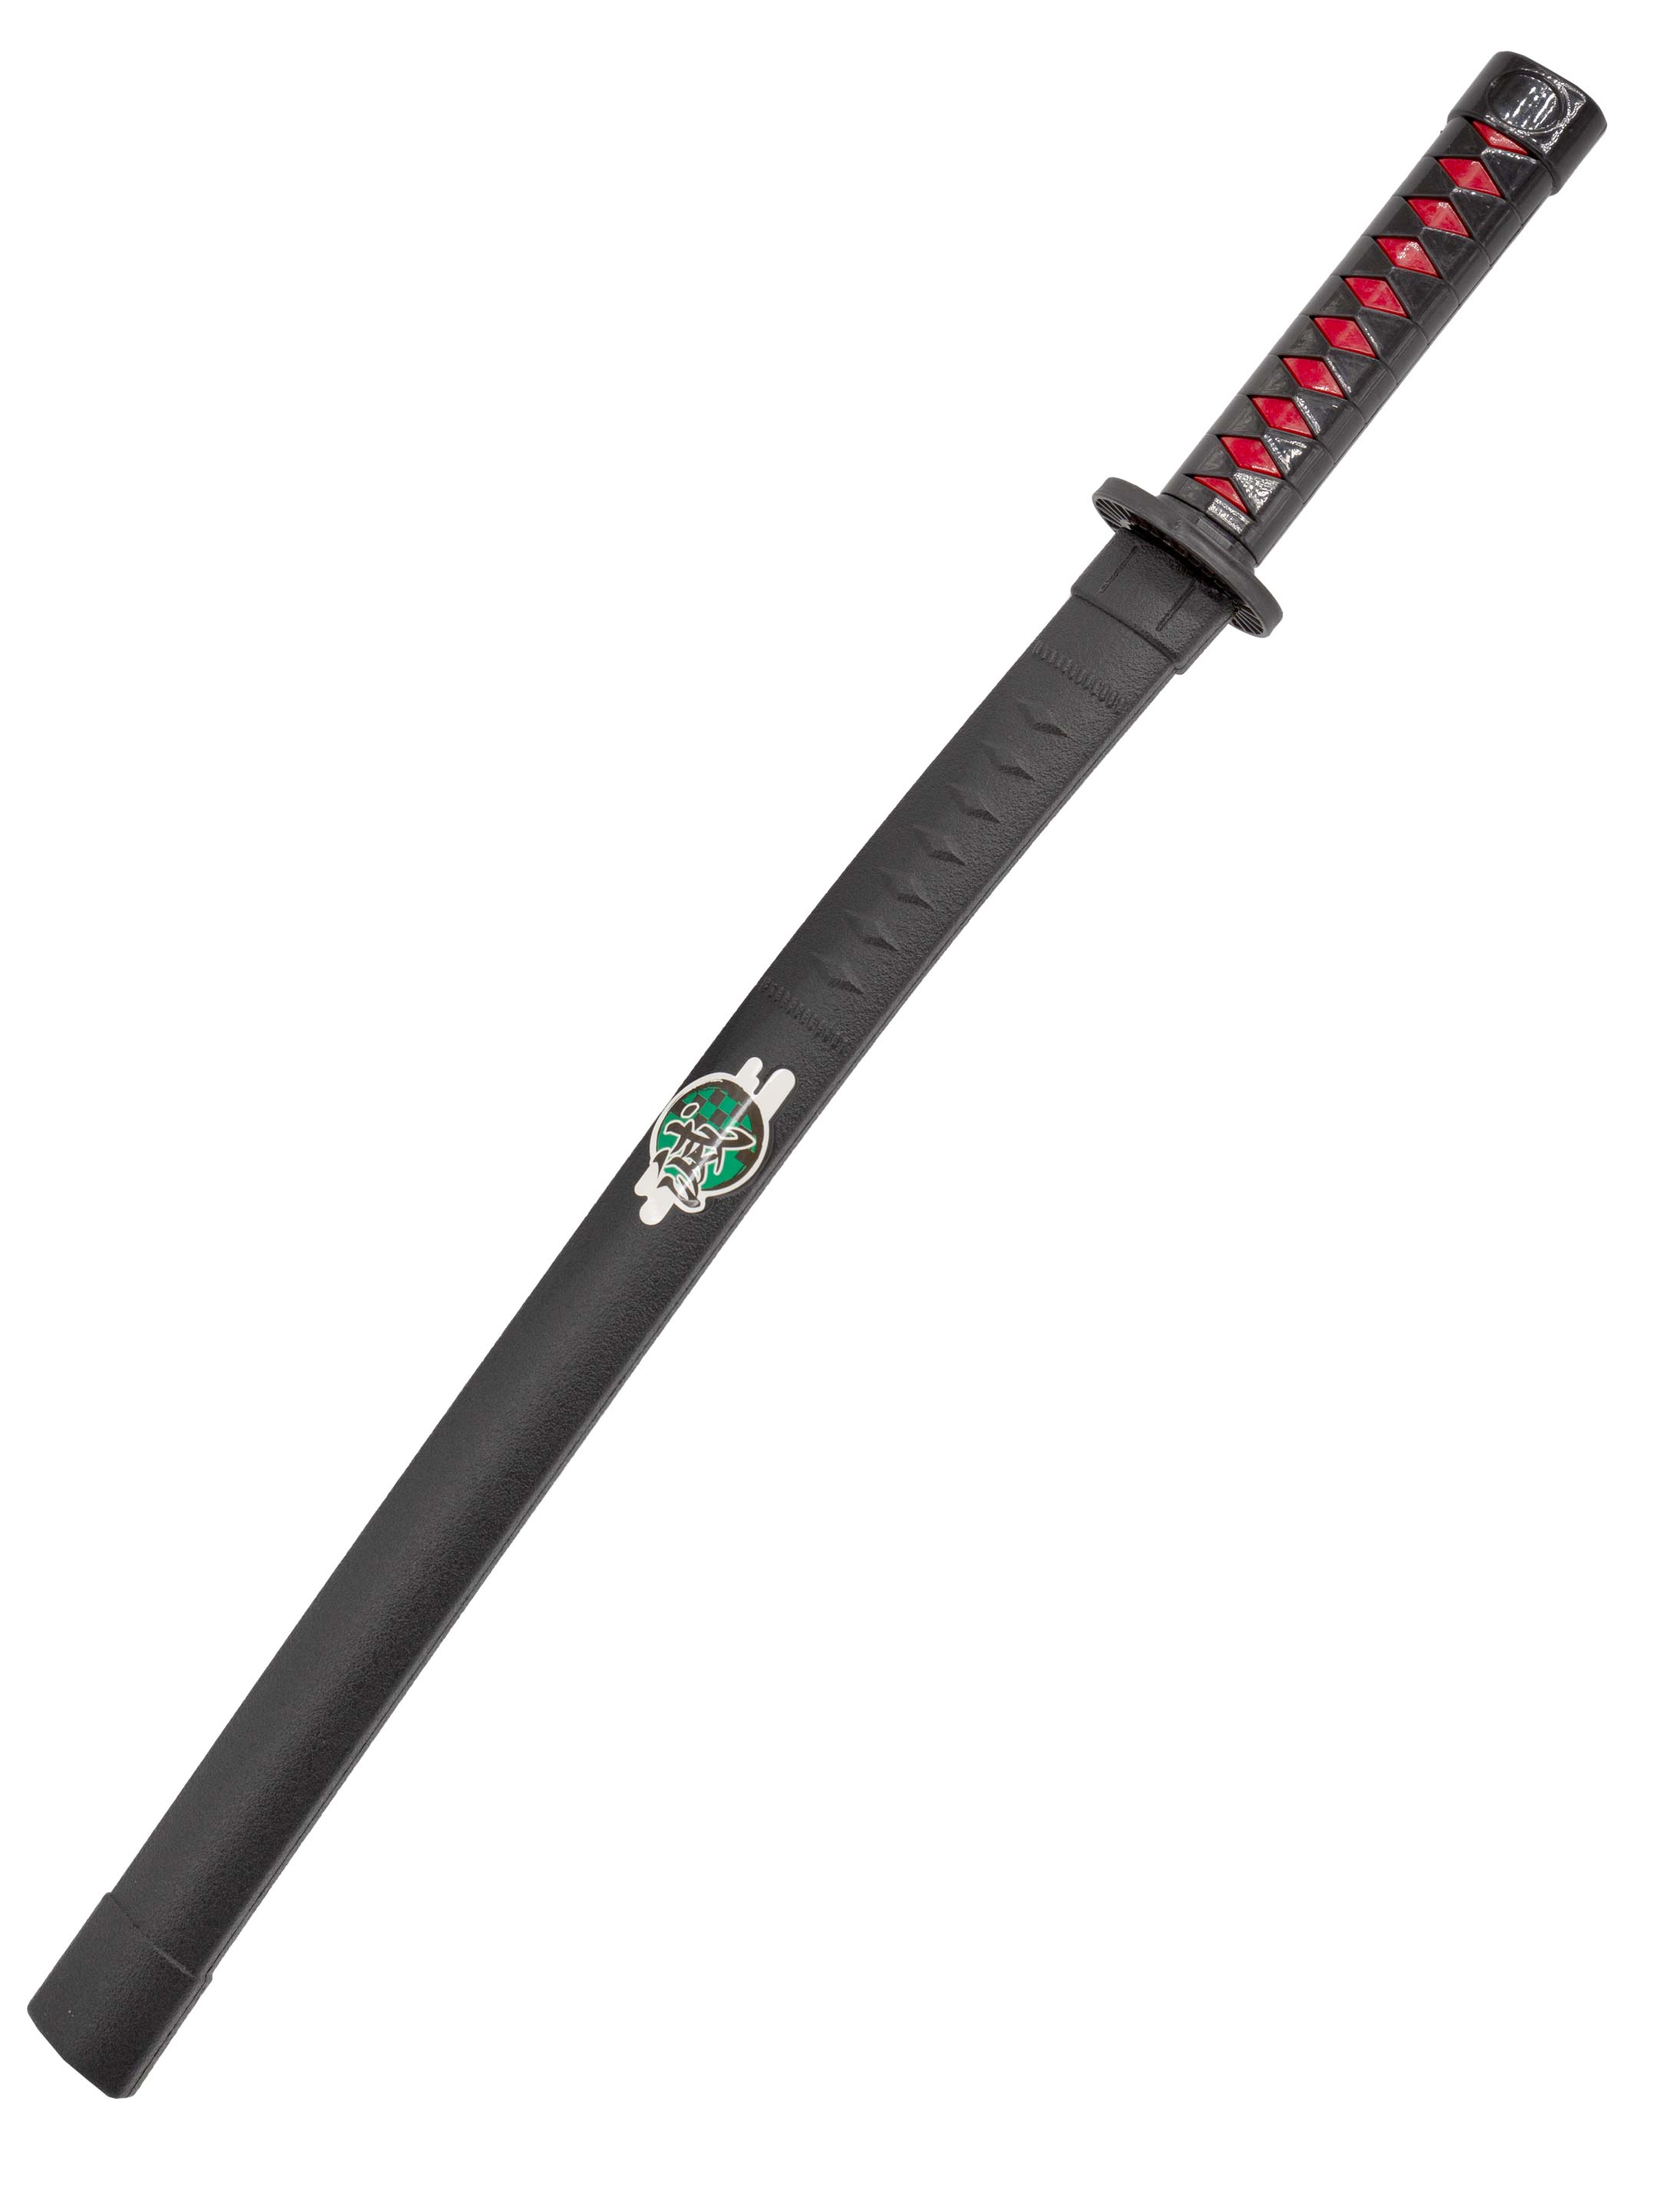 Ninjaschwert 68cm schwarz